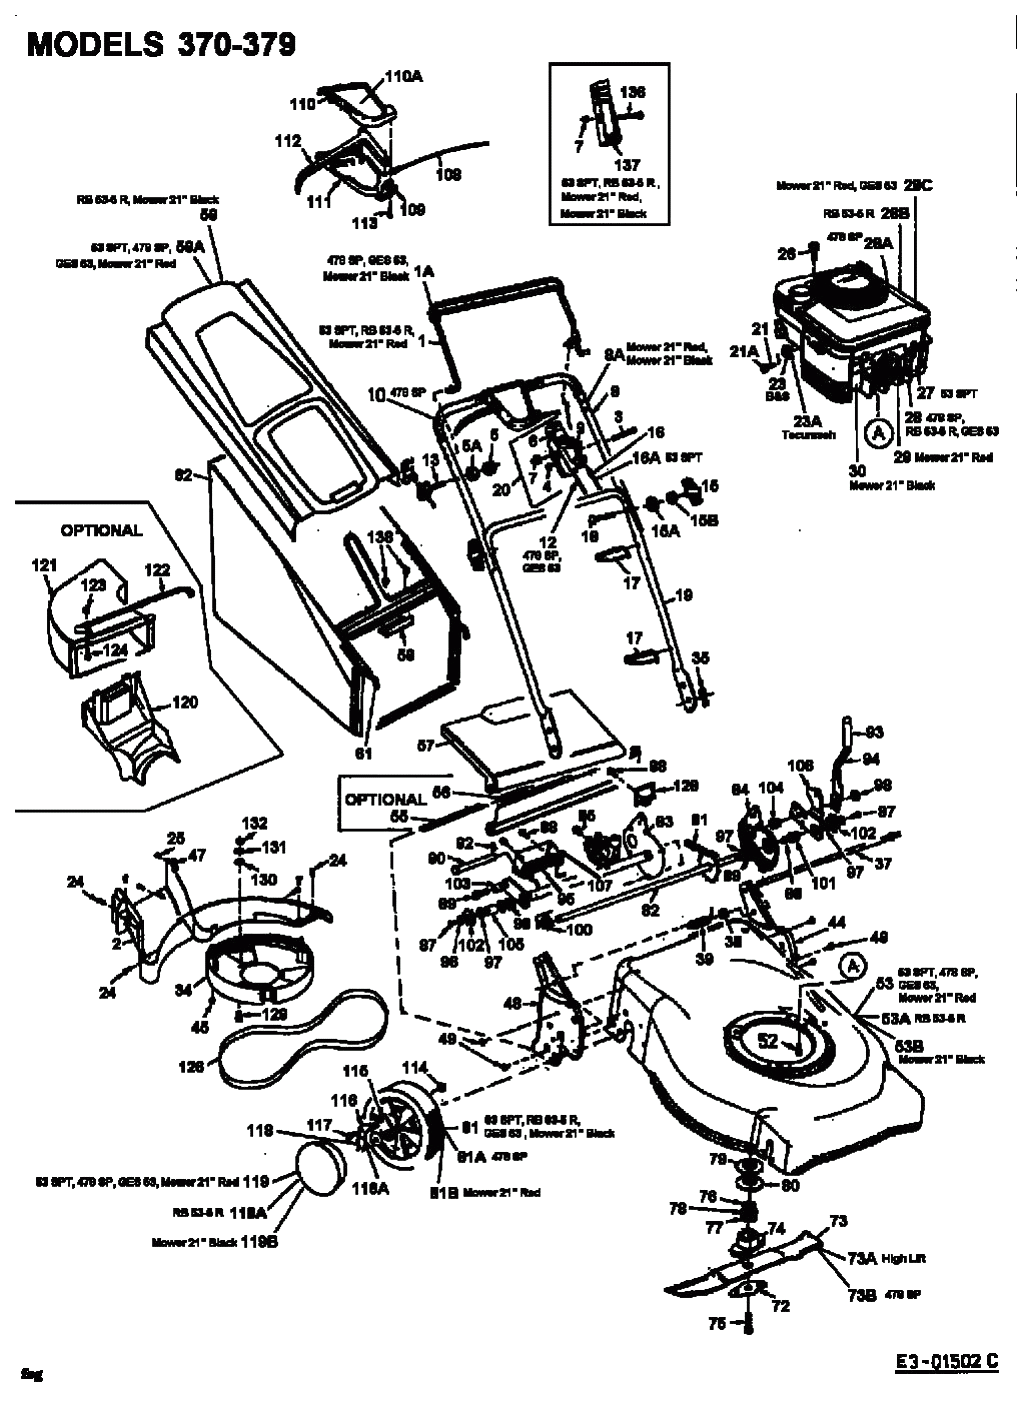 MTD Артикул 12A-378N602 (год выпуска 2002). Основная деталировка